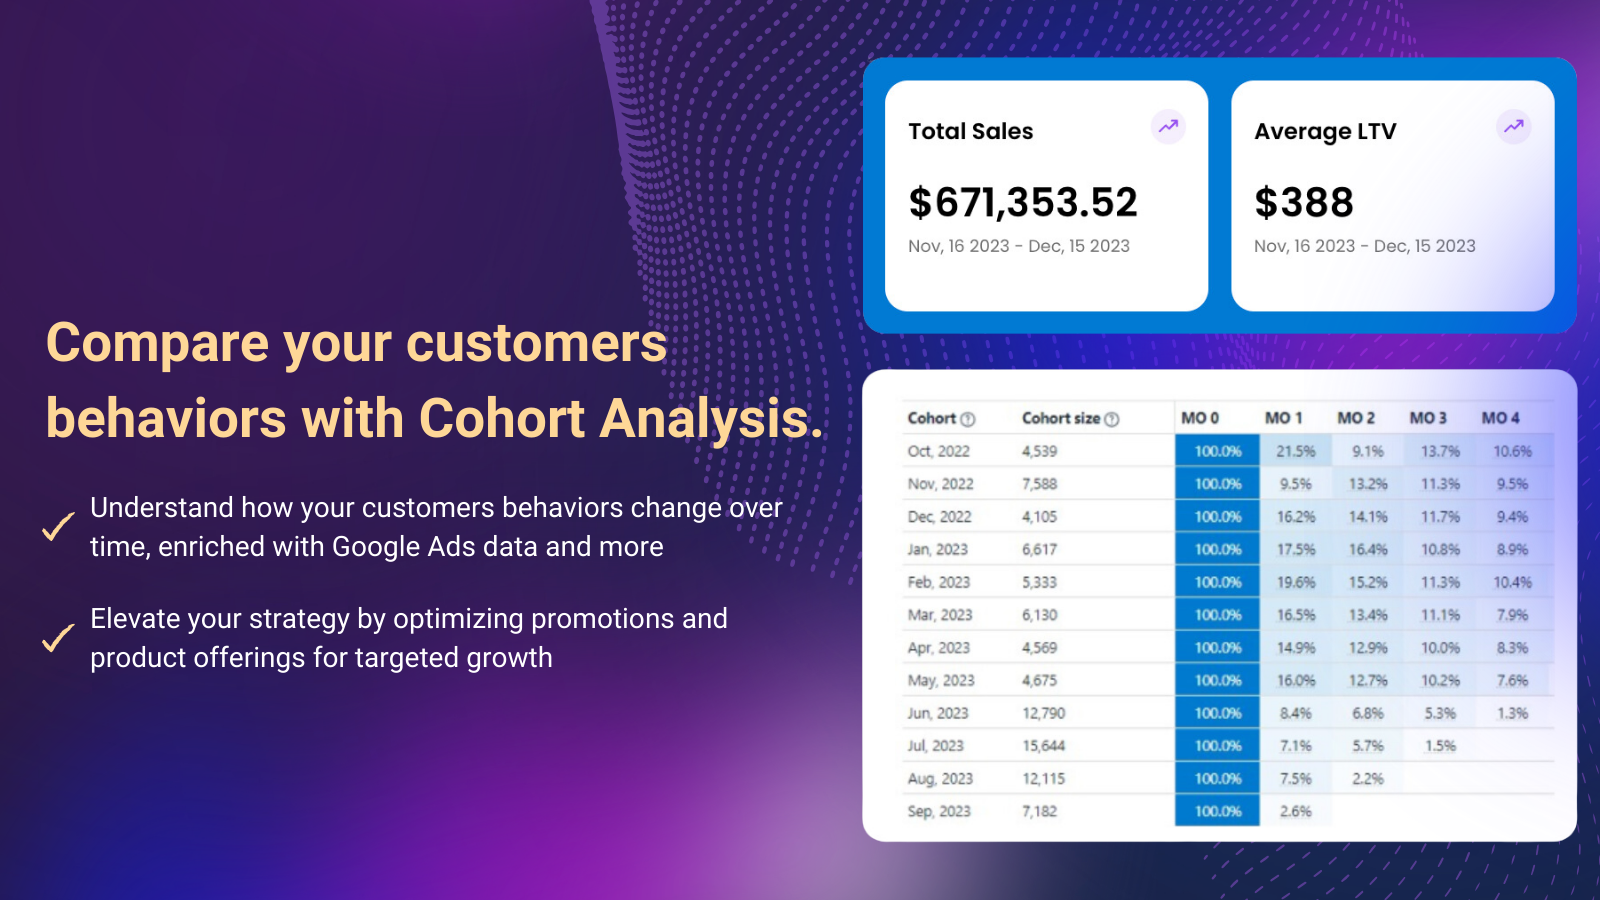 Cohort analysis provide customer behavior insights